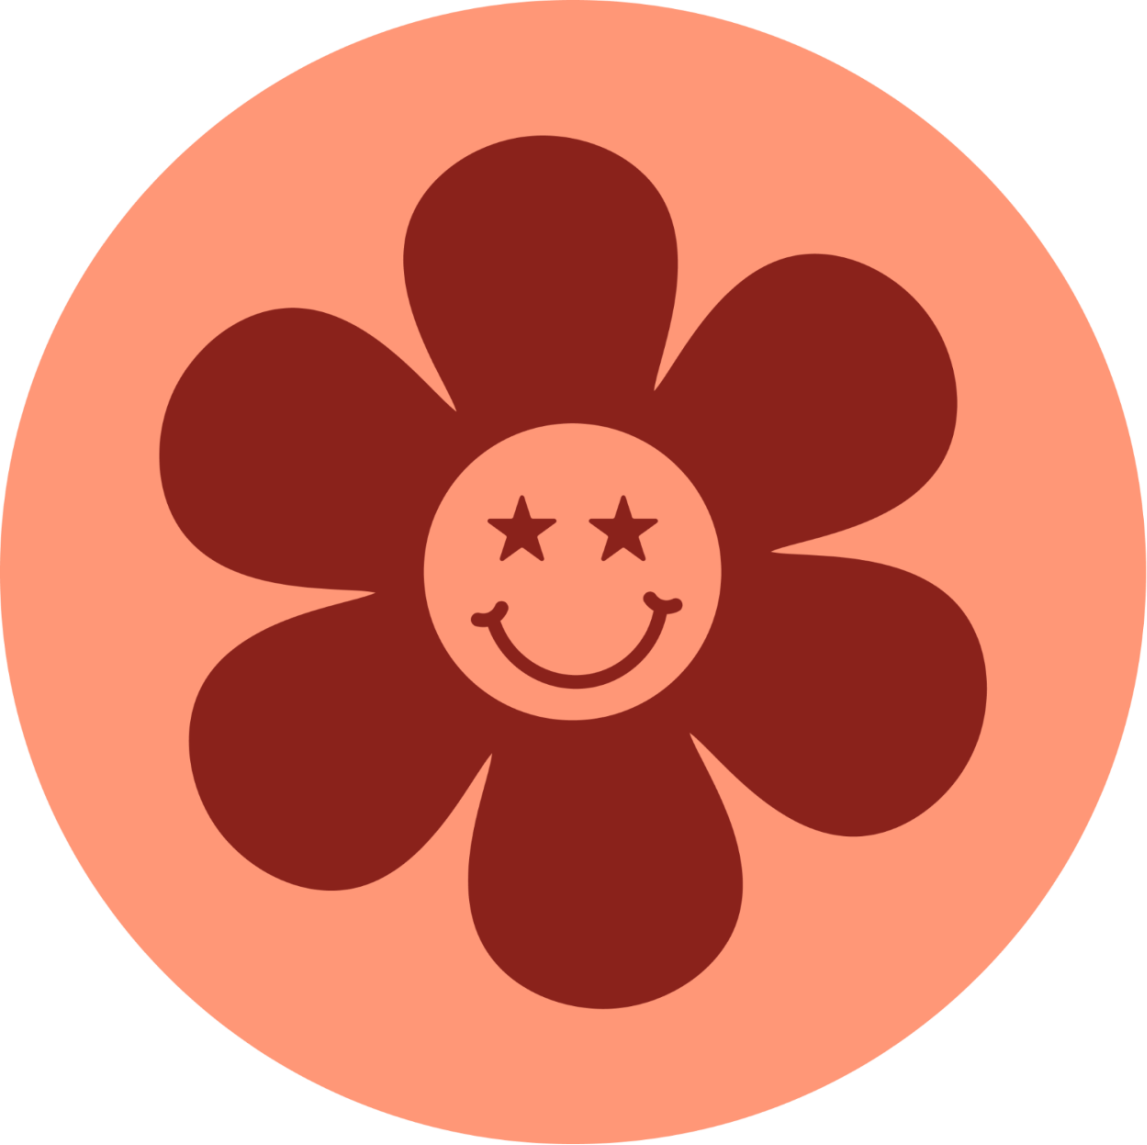 High potency logo with an upward arrow icon